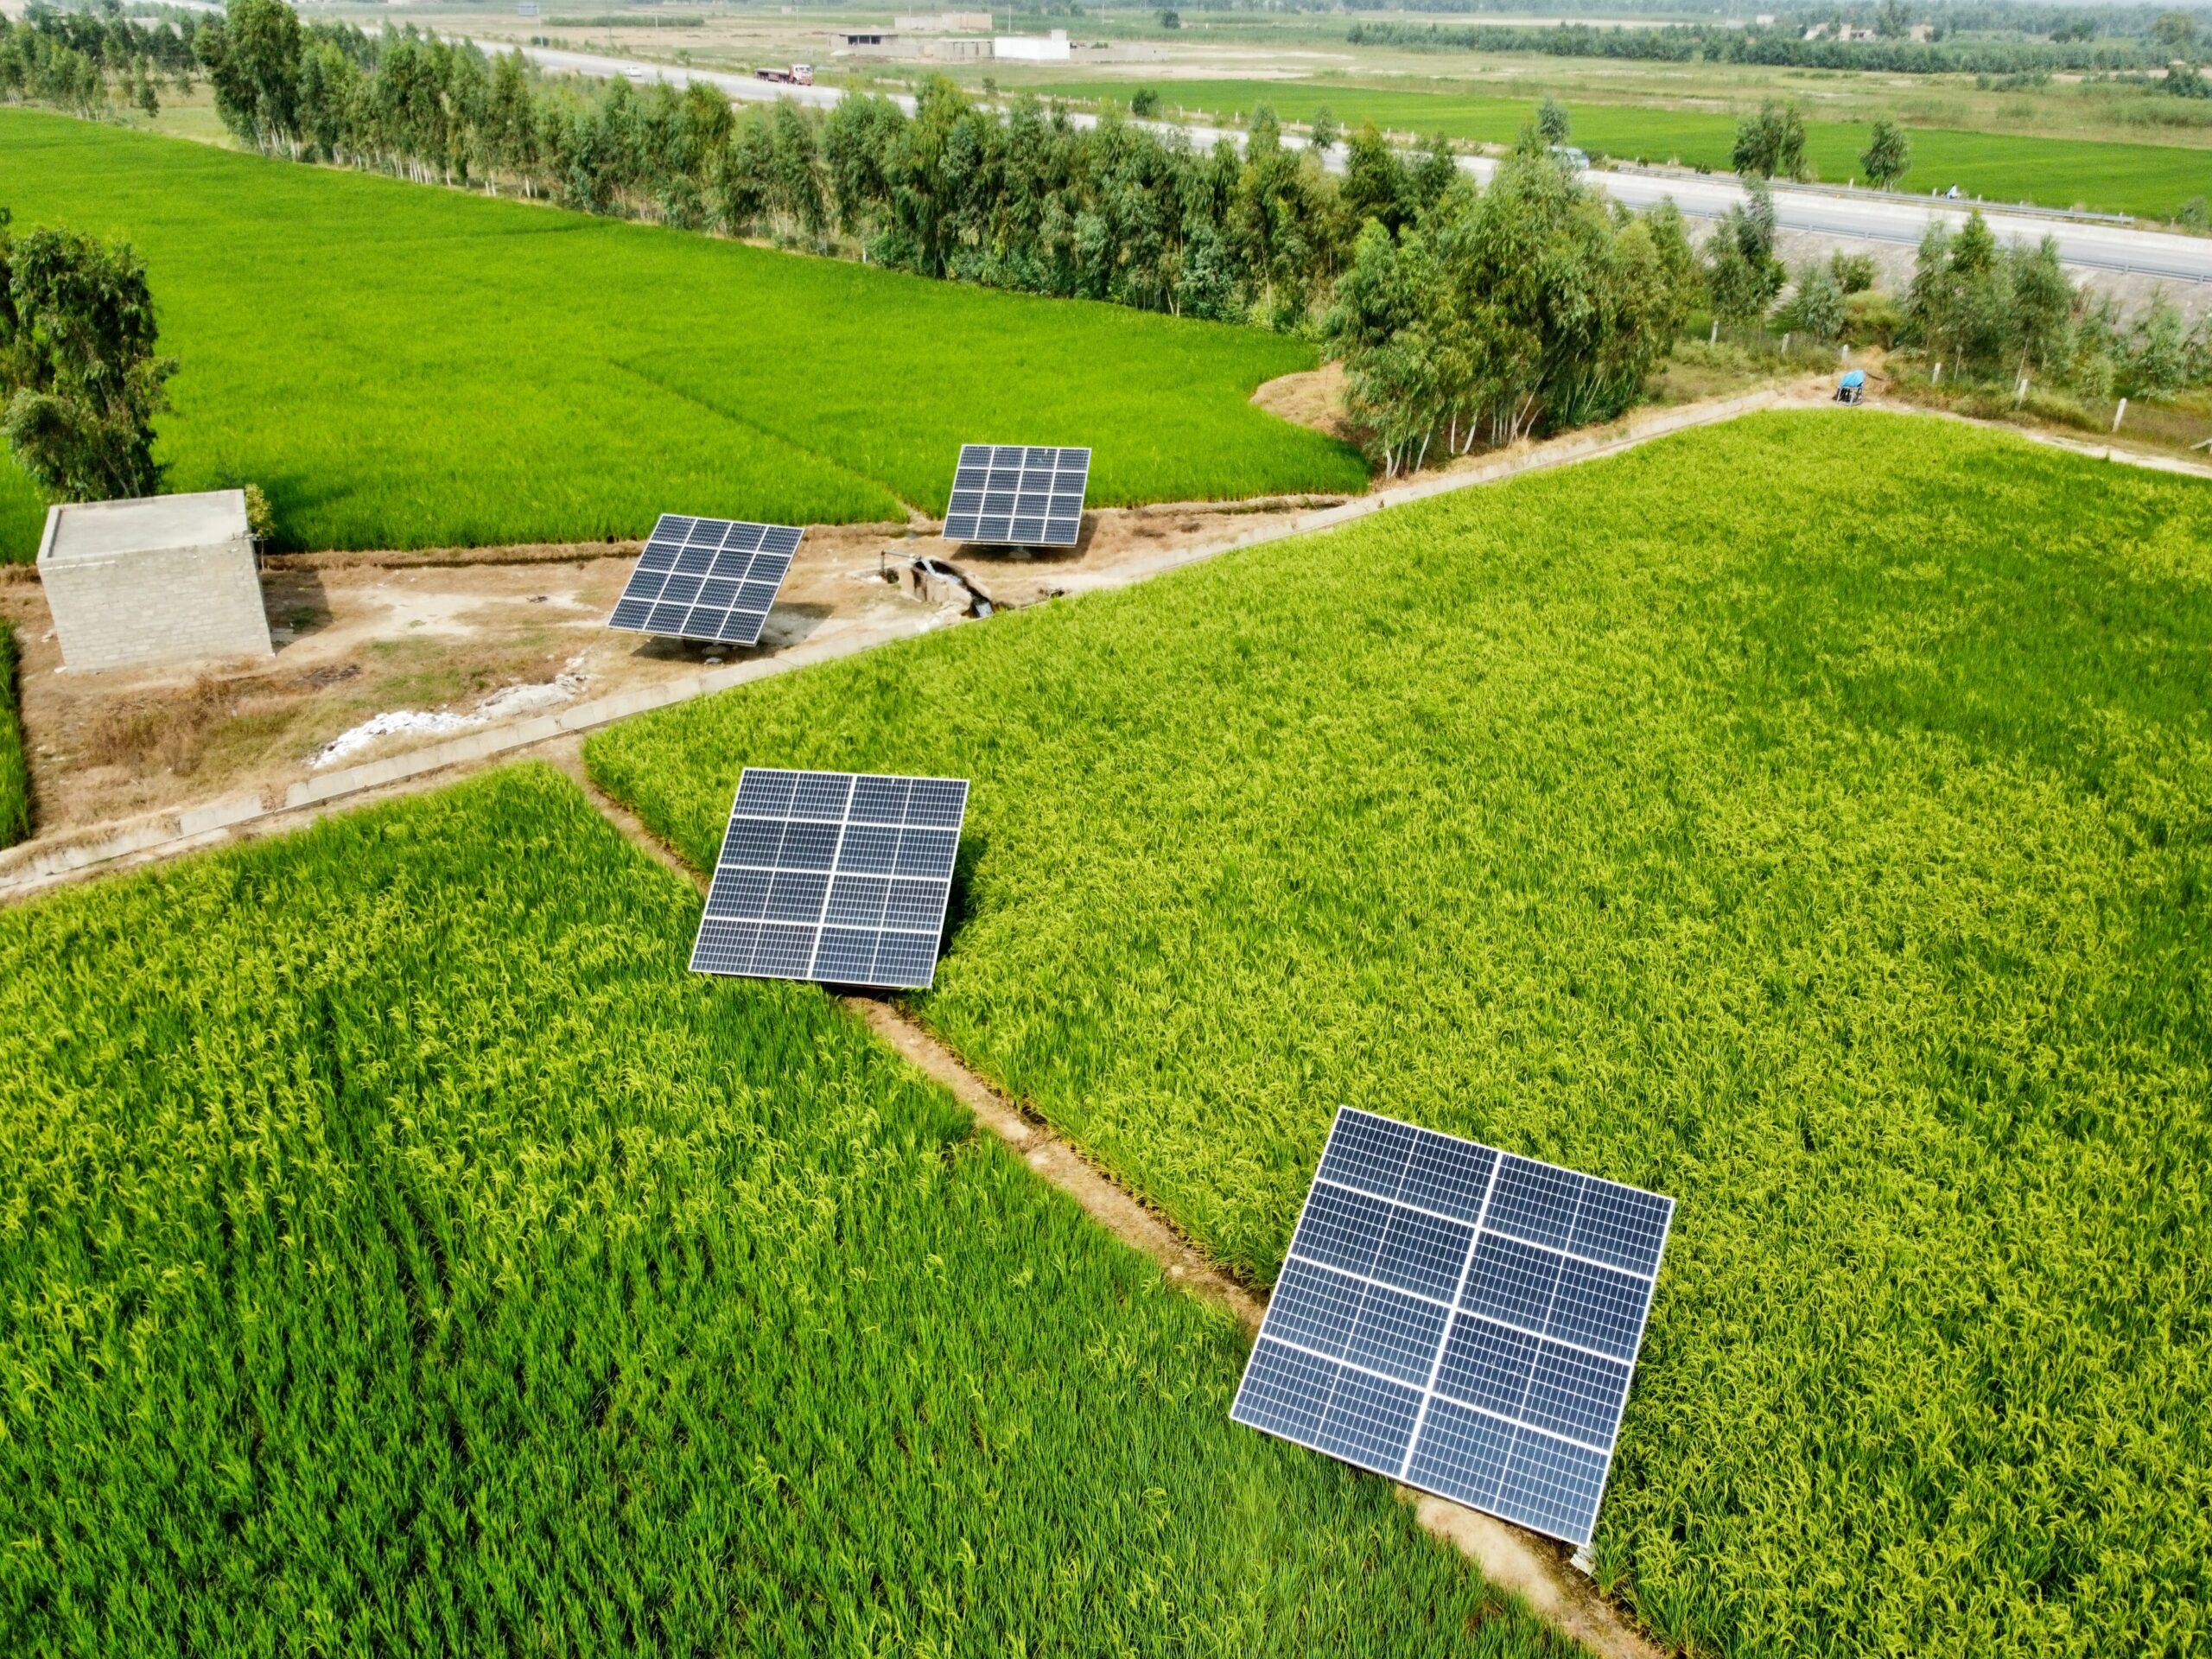 Seguro Fotovoltaico en Comunidades de Regantes